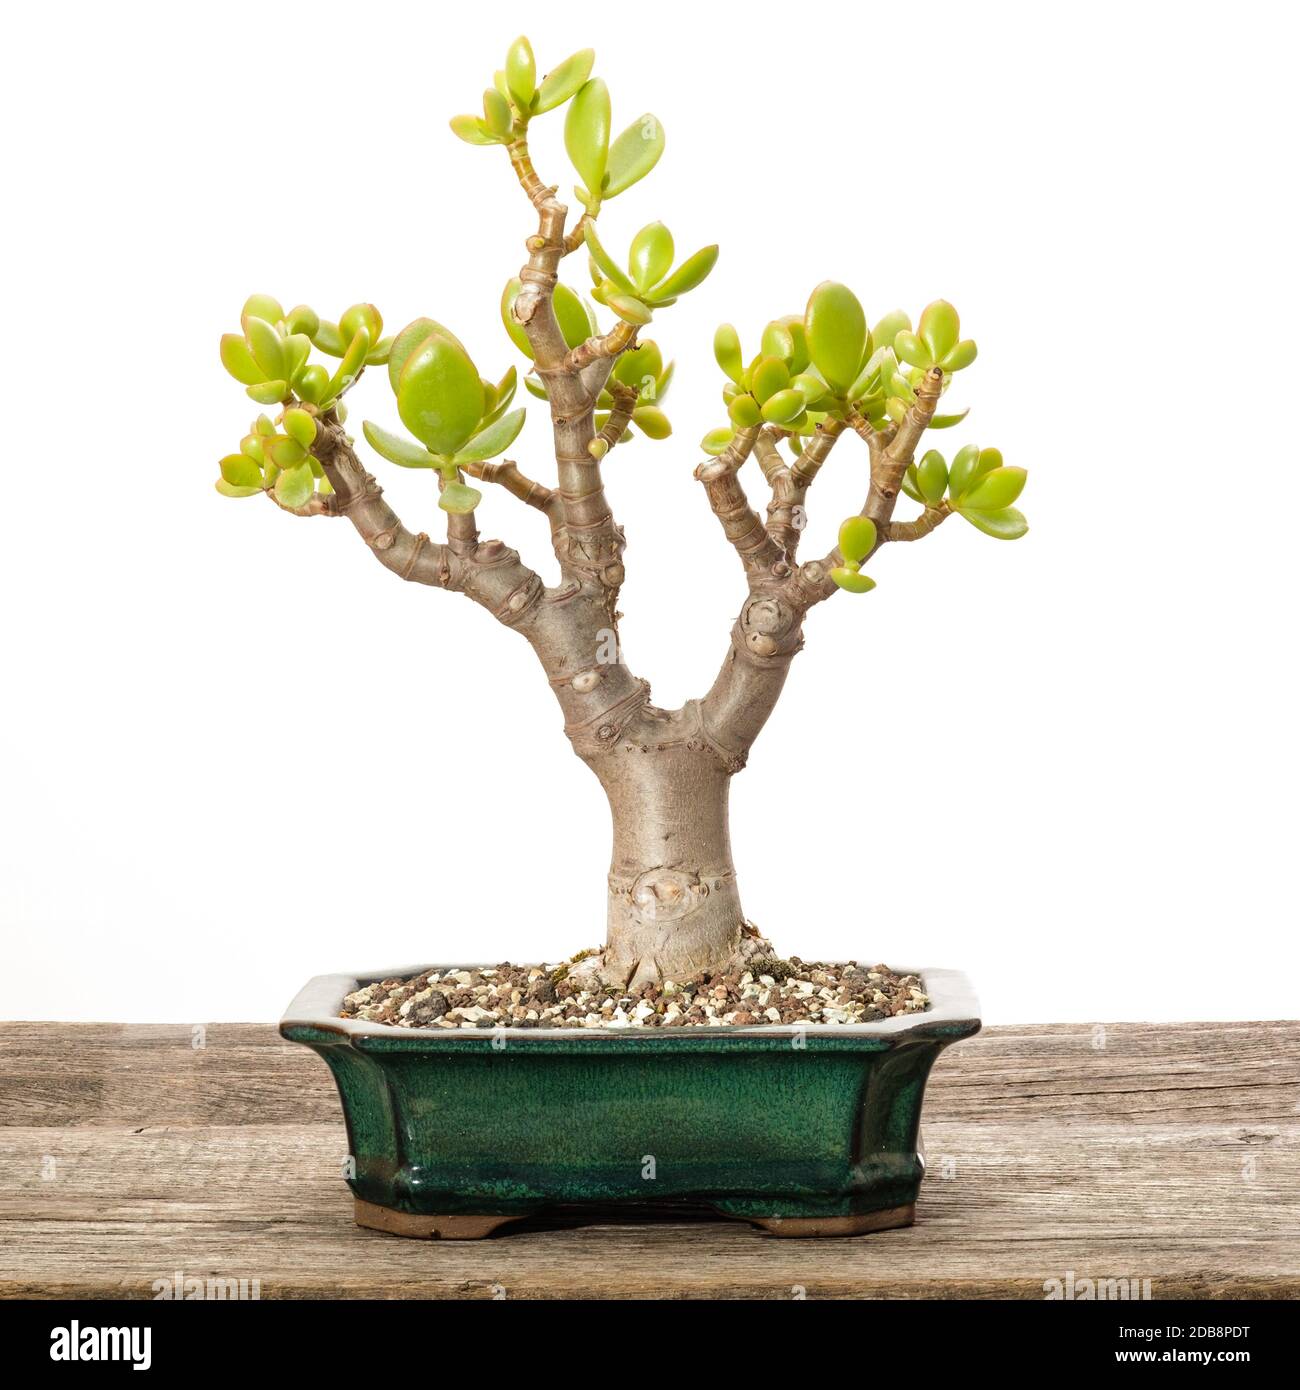 Crassula ovata money tree as bonsai in a pot Stock Photo - Alamy